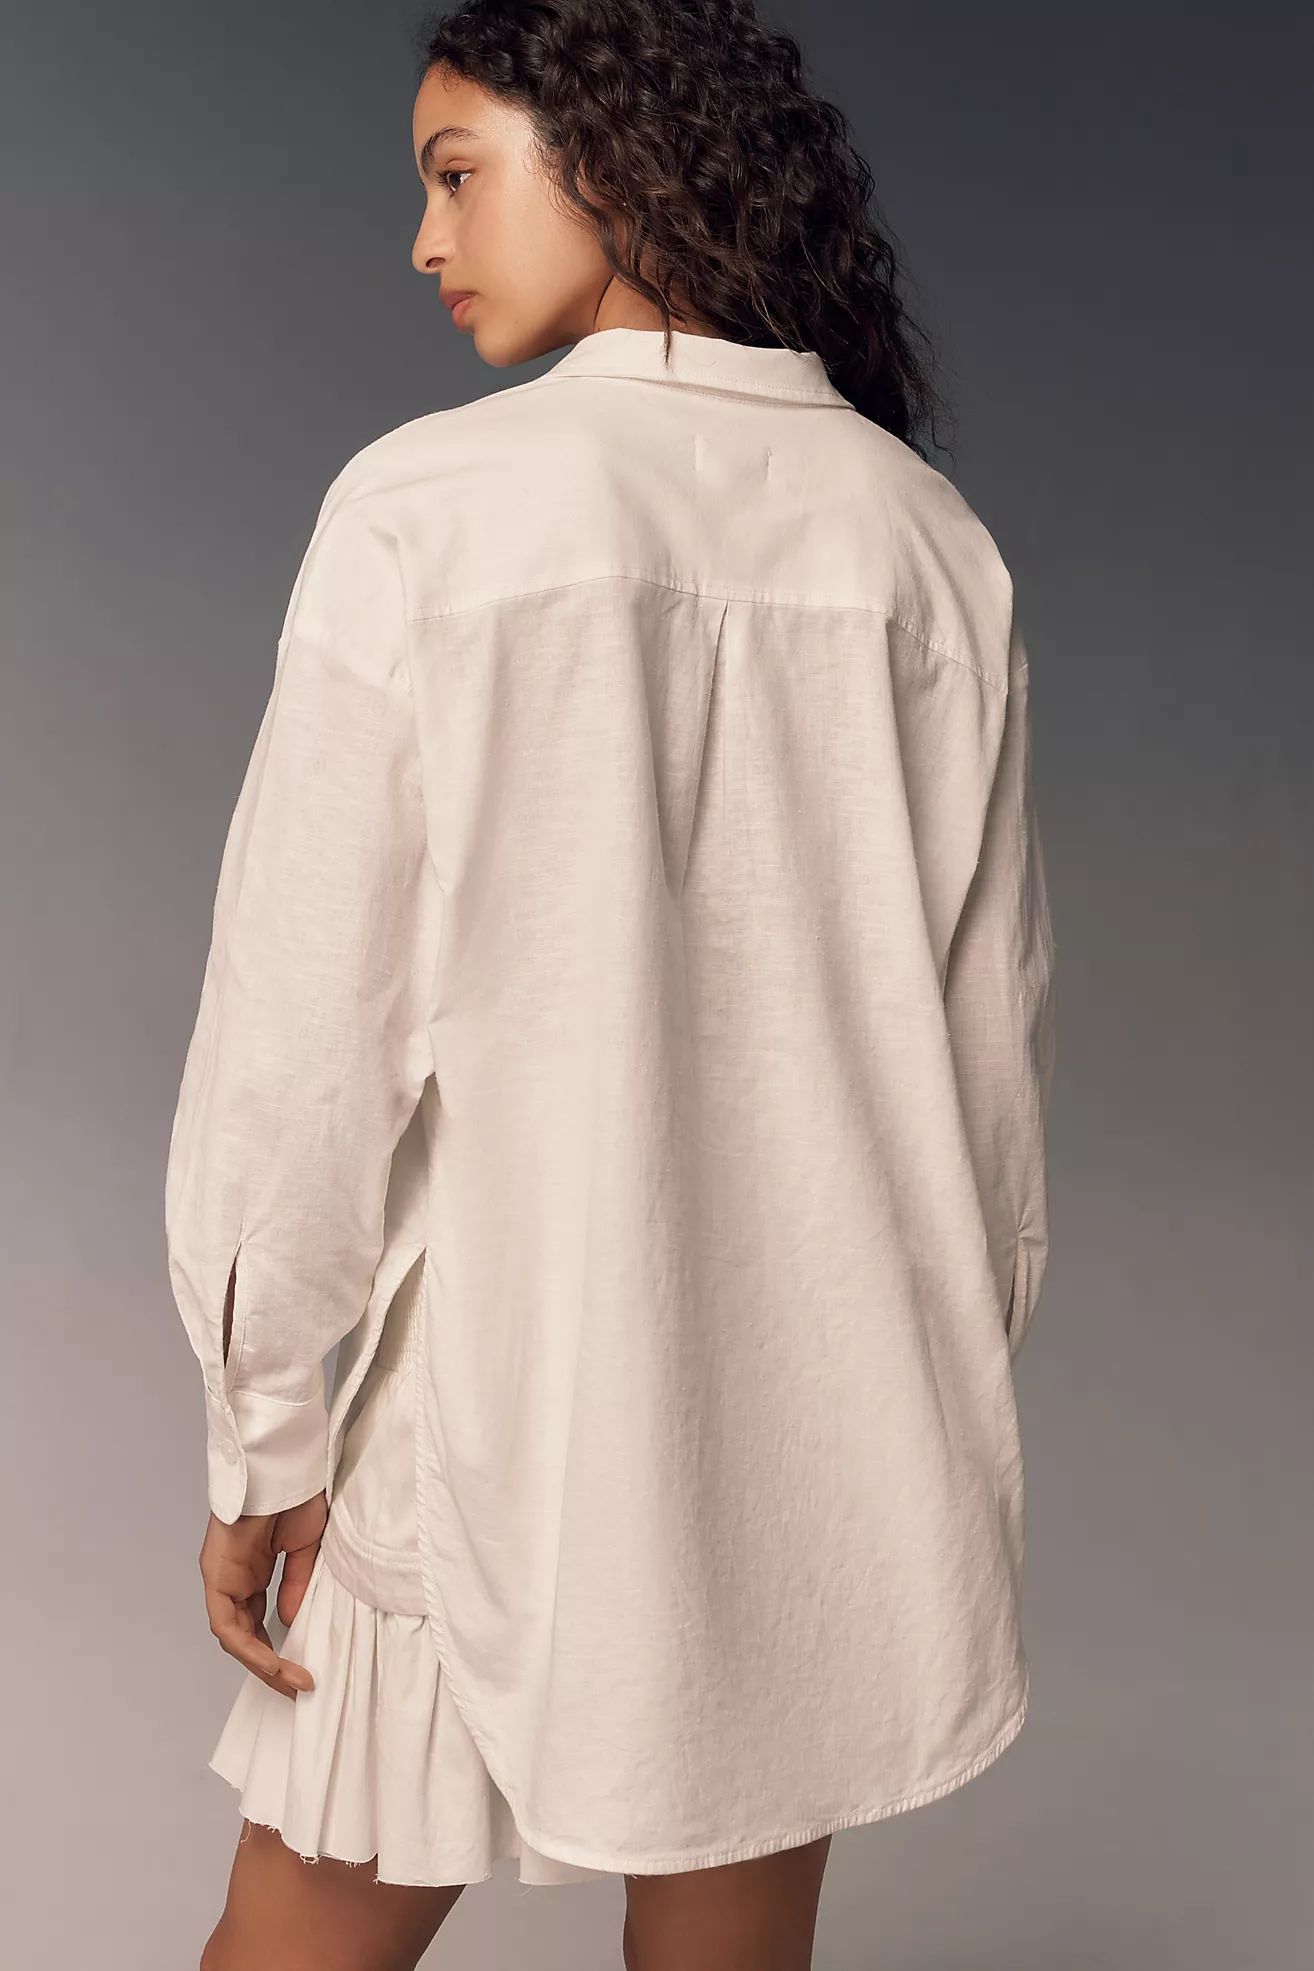 The Bennet Buttondown Shirt by Maeve: Linen Edition | Anthropologie (US)